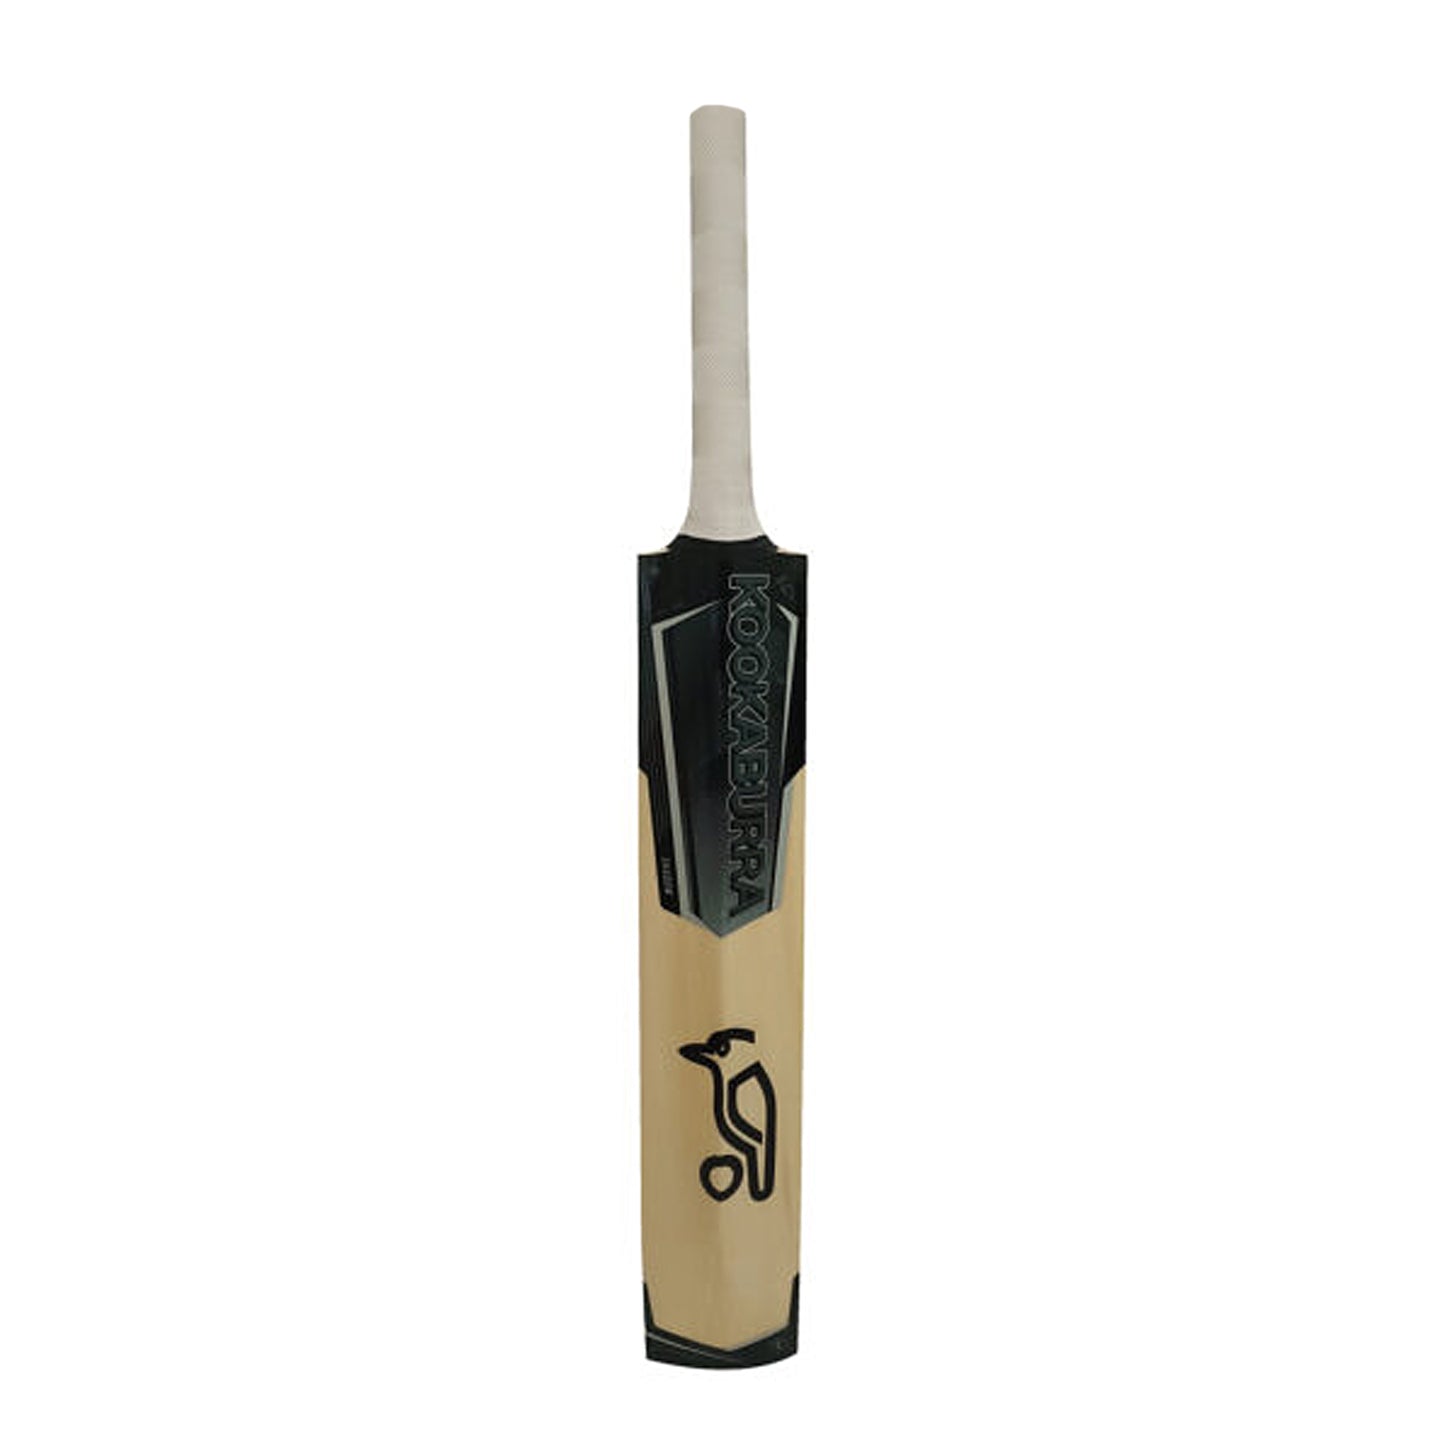 Kookaburra Shadow Prodigy 30 Kashmir Willow Cricket Bat - Best Price online Prokicksports.com